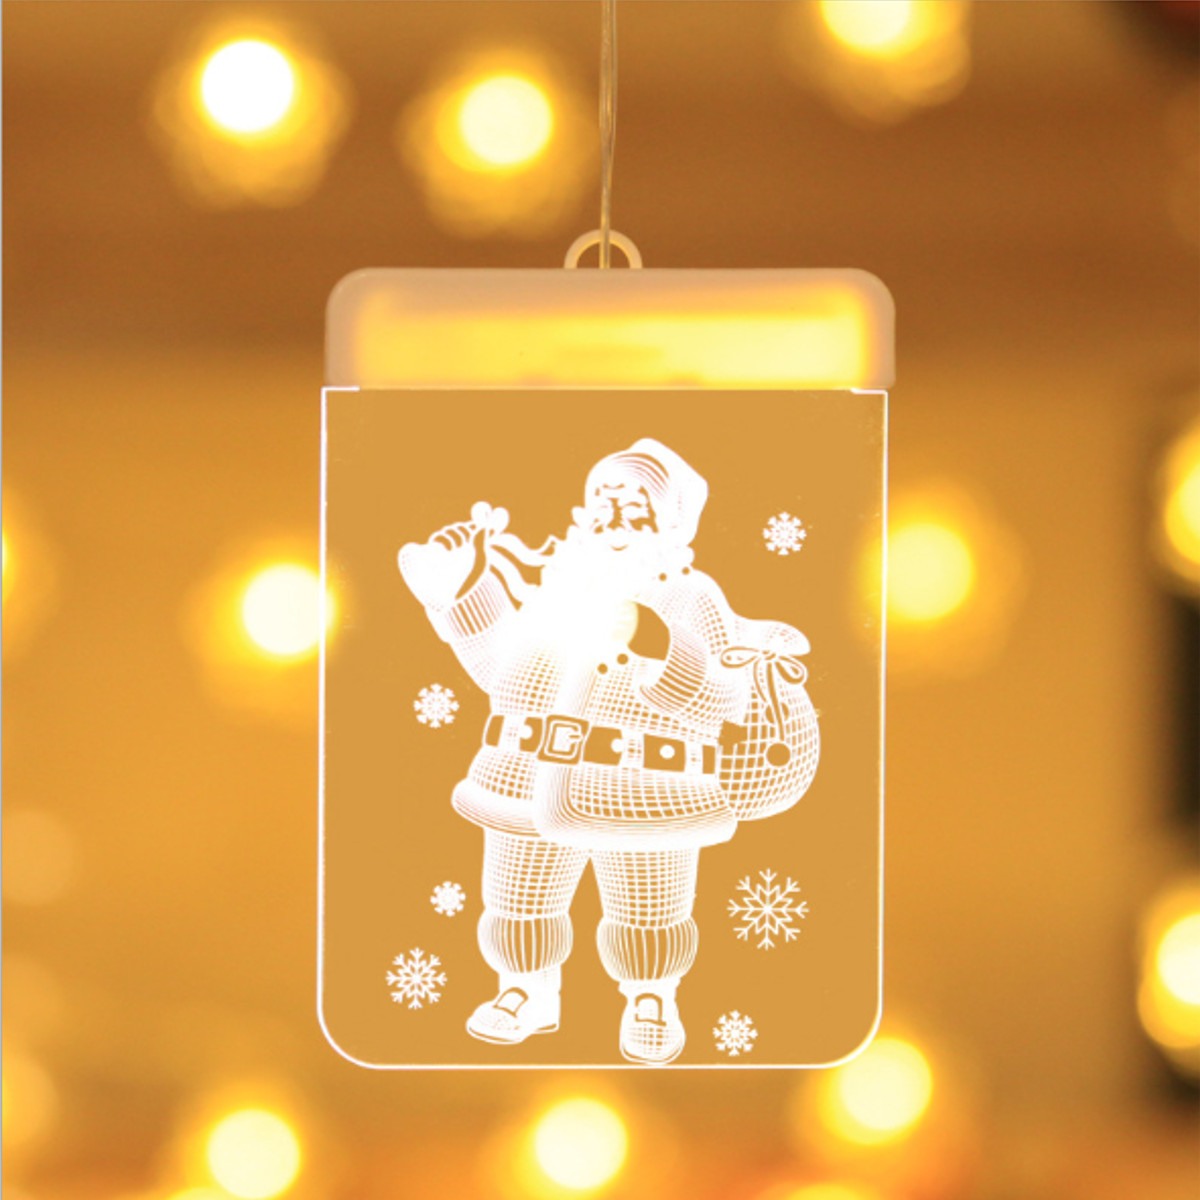 USB-3D-Acrylic-Warm-White-Colorful-LED-Hanging-Holiday-Light--Wall-Christmas-Wedding-Party-Illusory--1607473-6